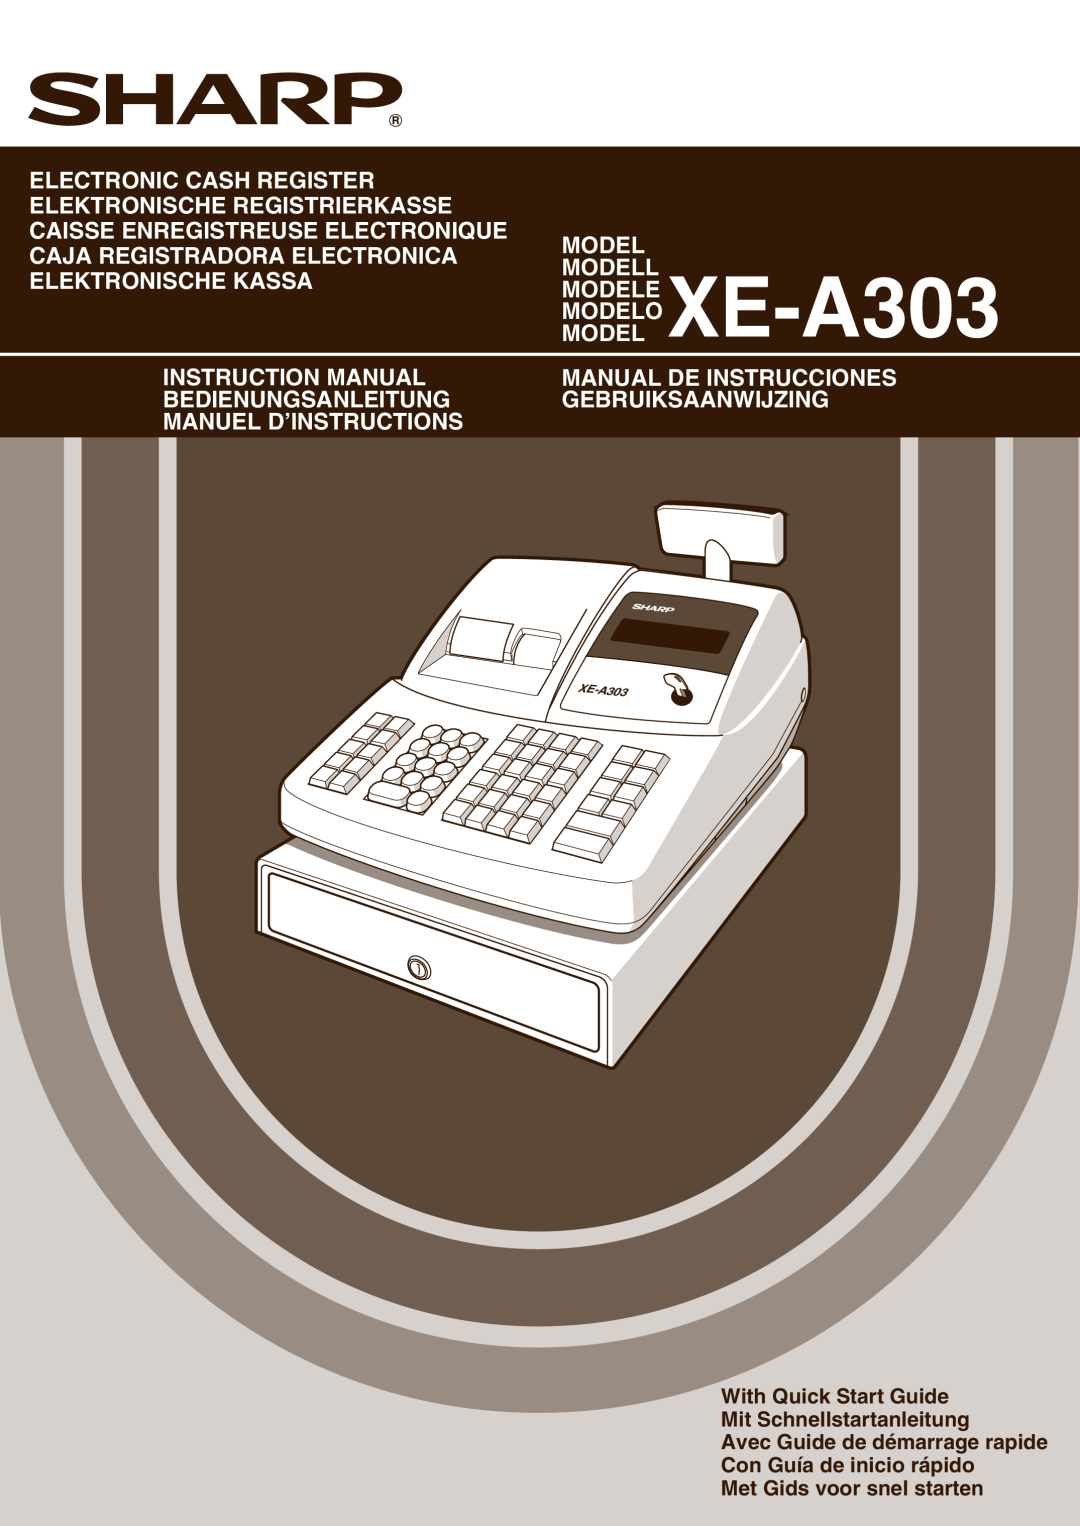 Sharp XE-A303 instruction manual Electronic Cash Register 